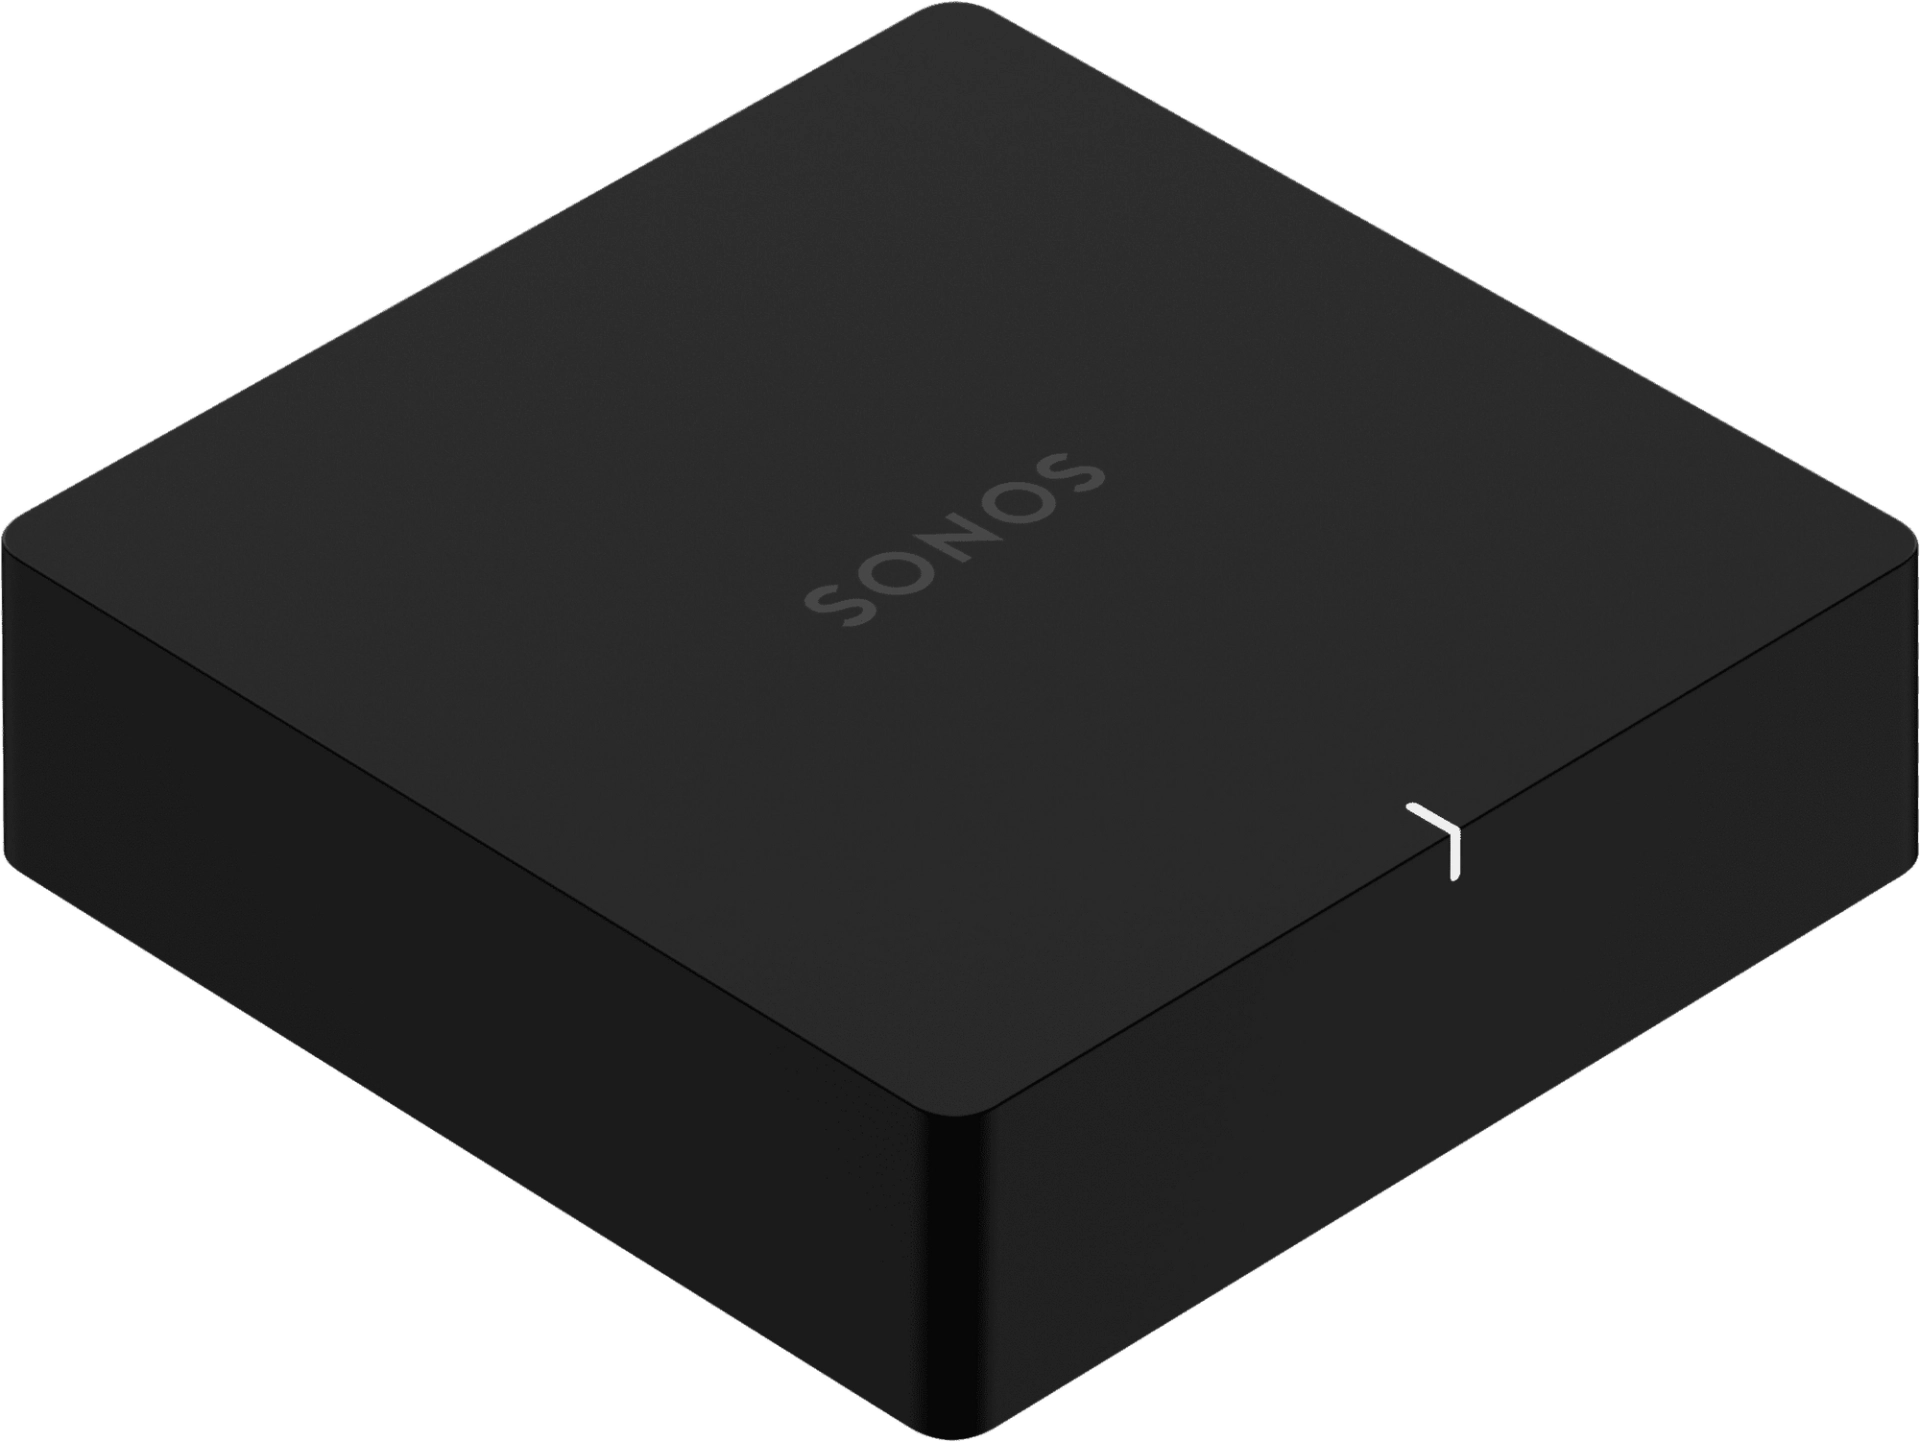 Sonos Port Audio Streamer